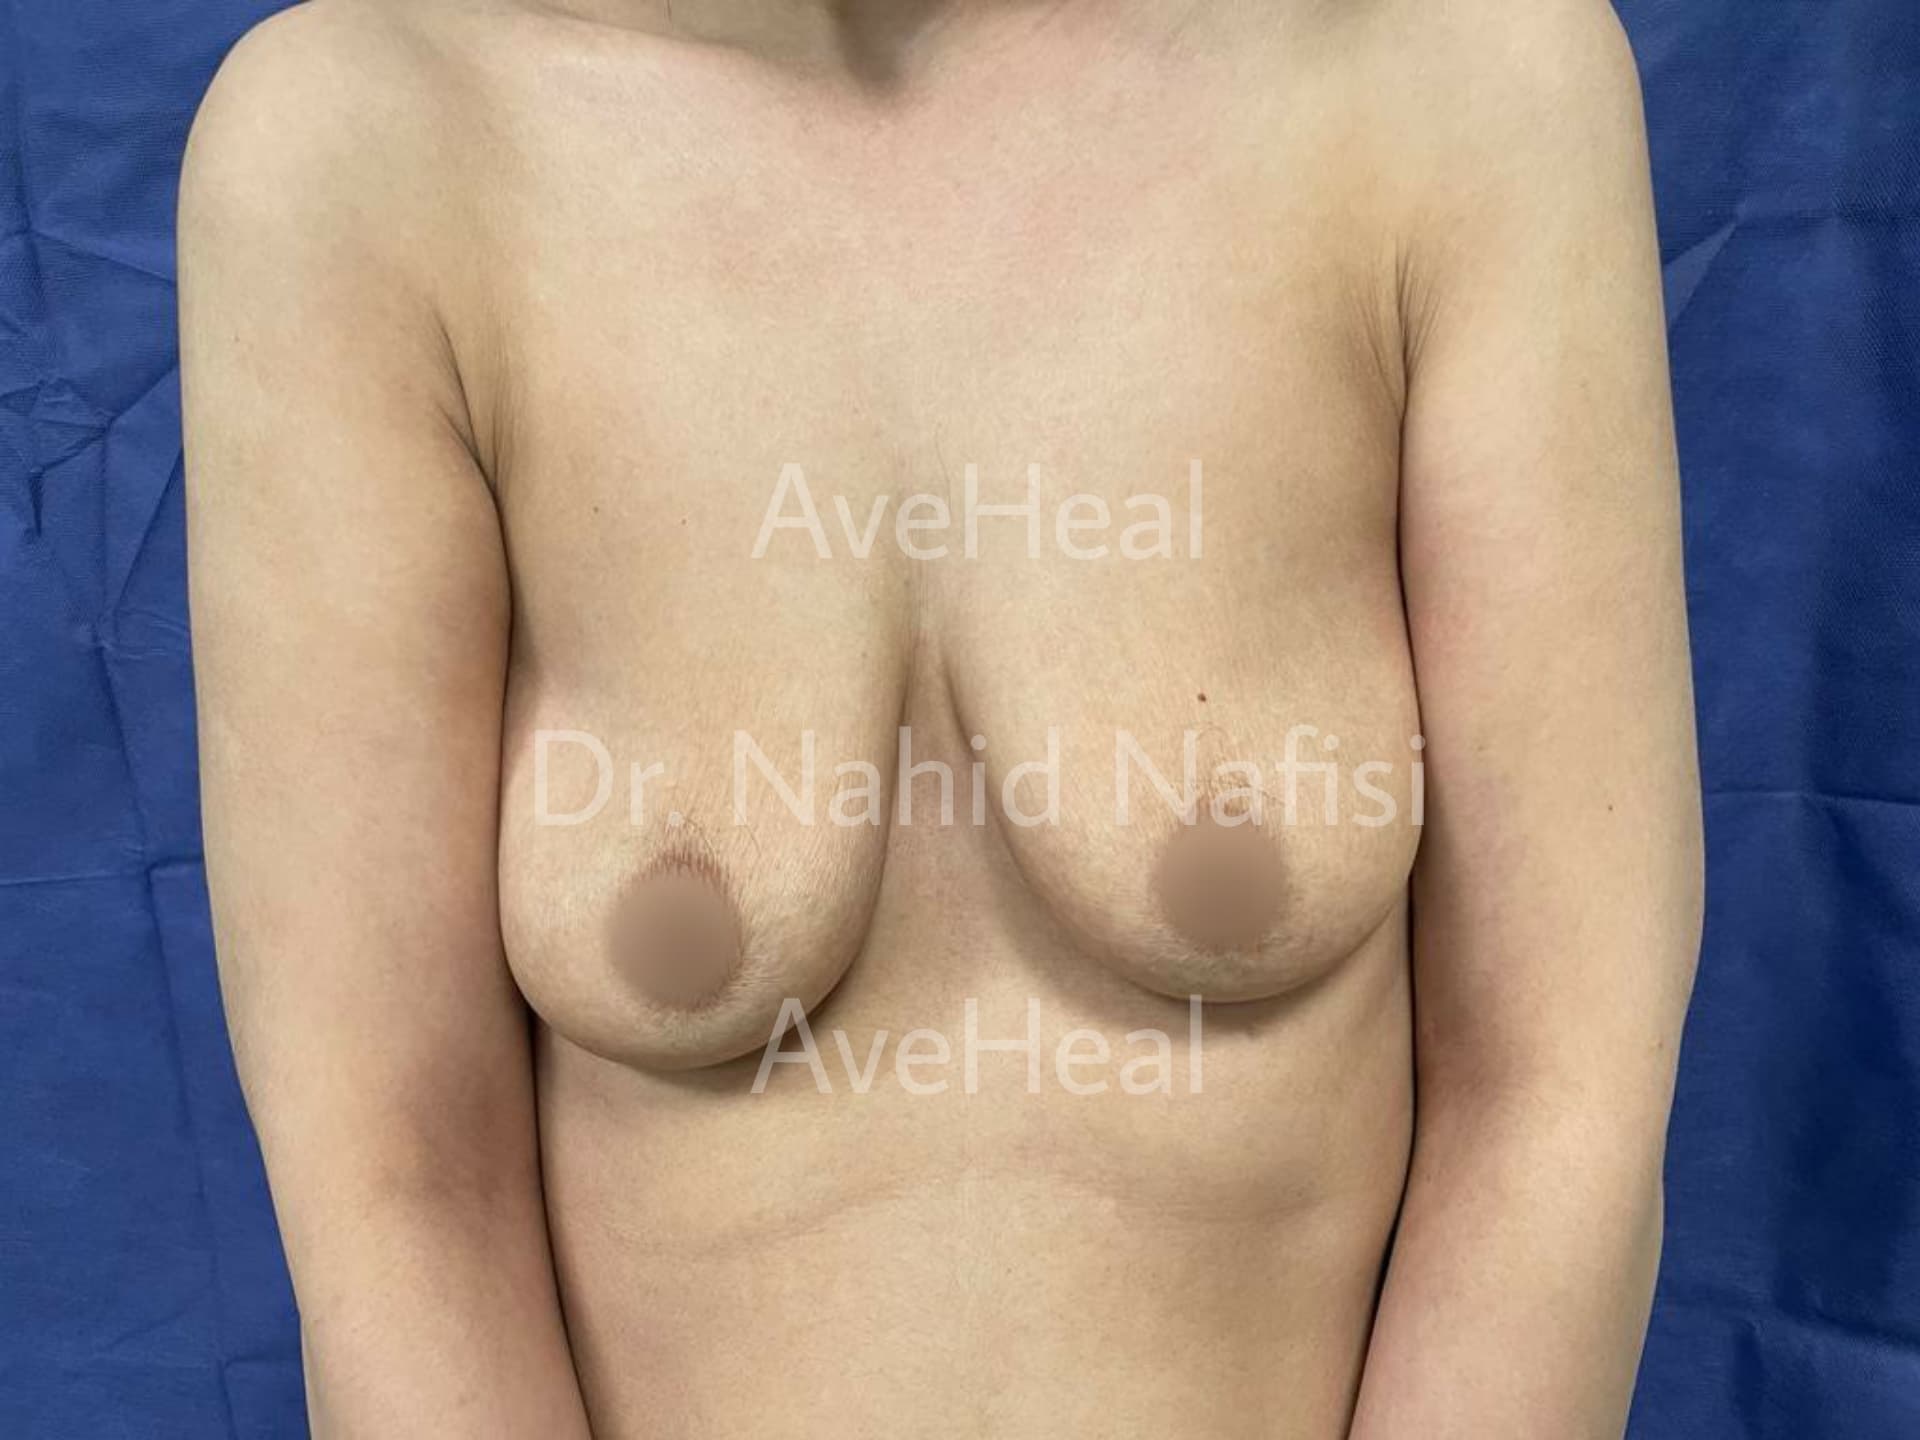 before-breast-augmentation-dr-nahid-nafisi